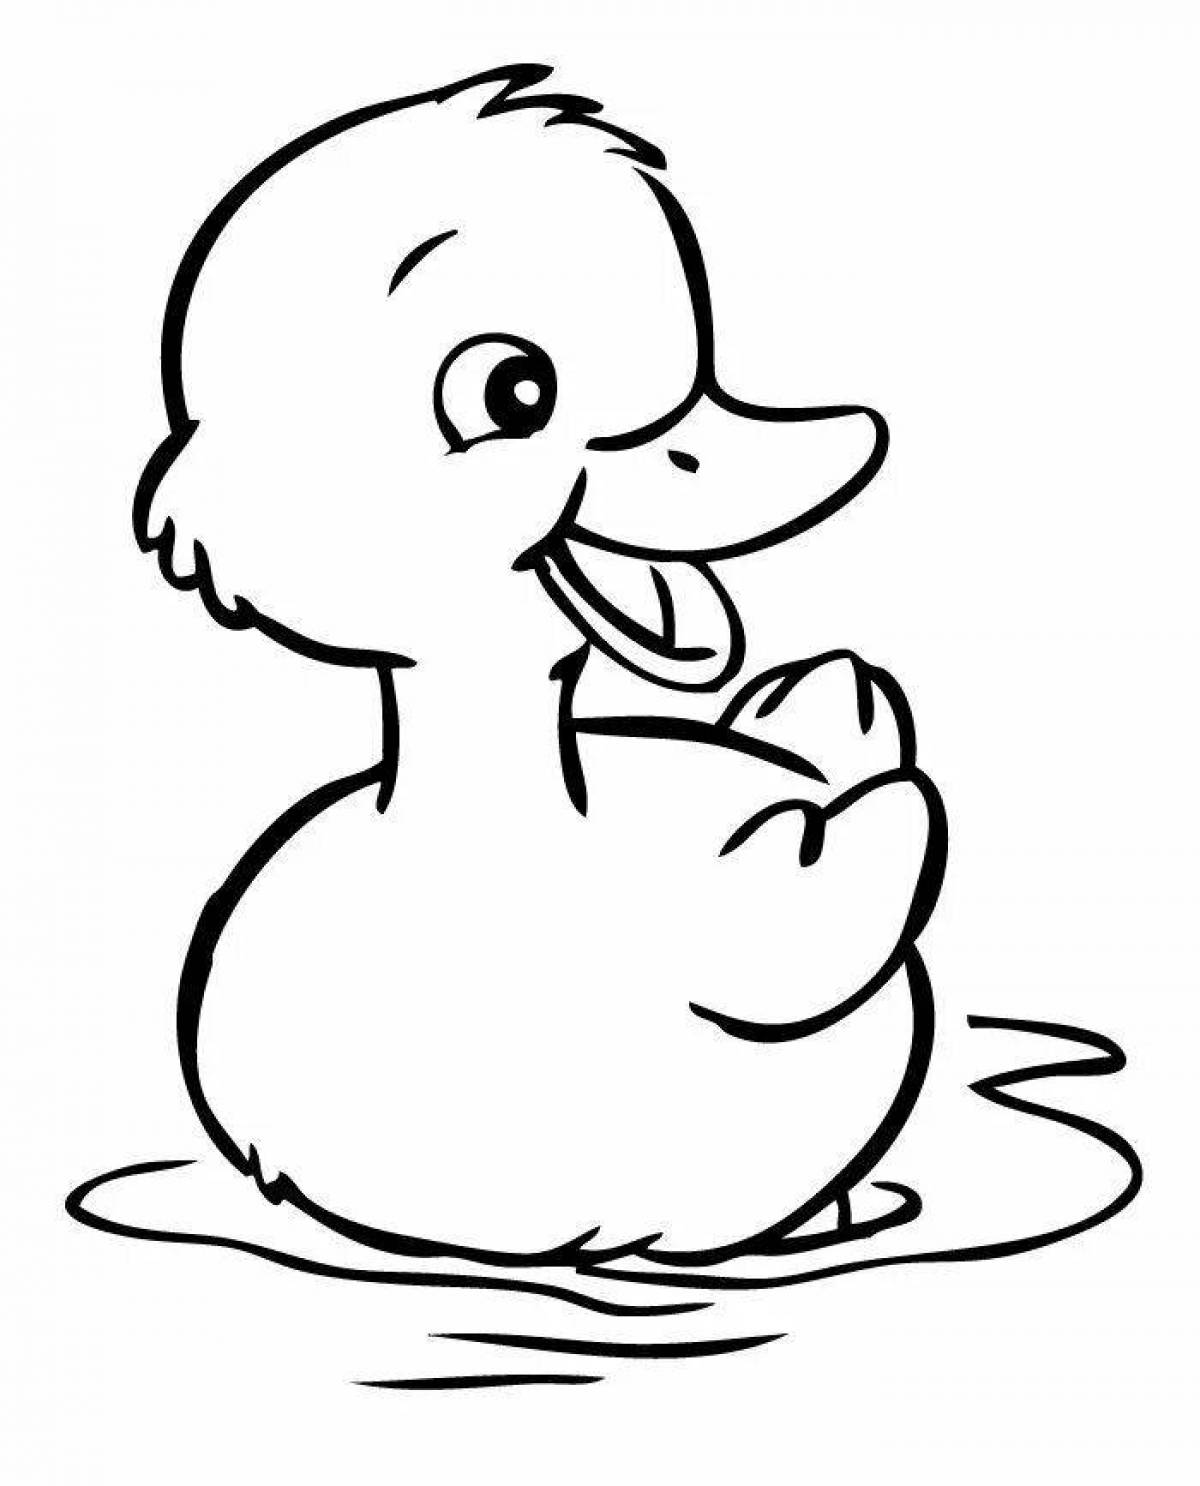 Exquisite duck with ducklings